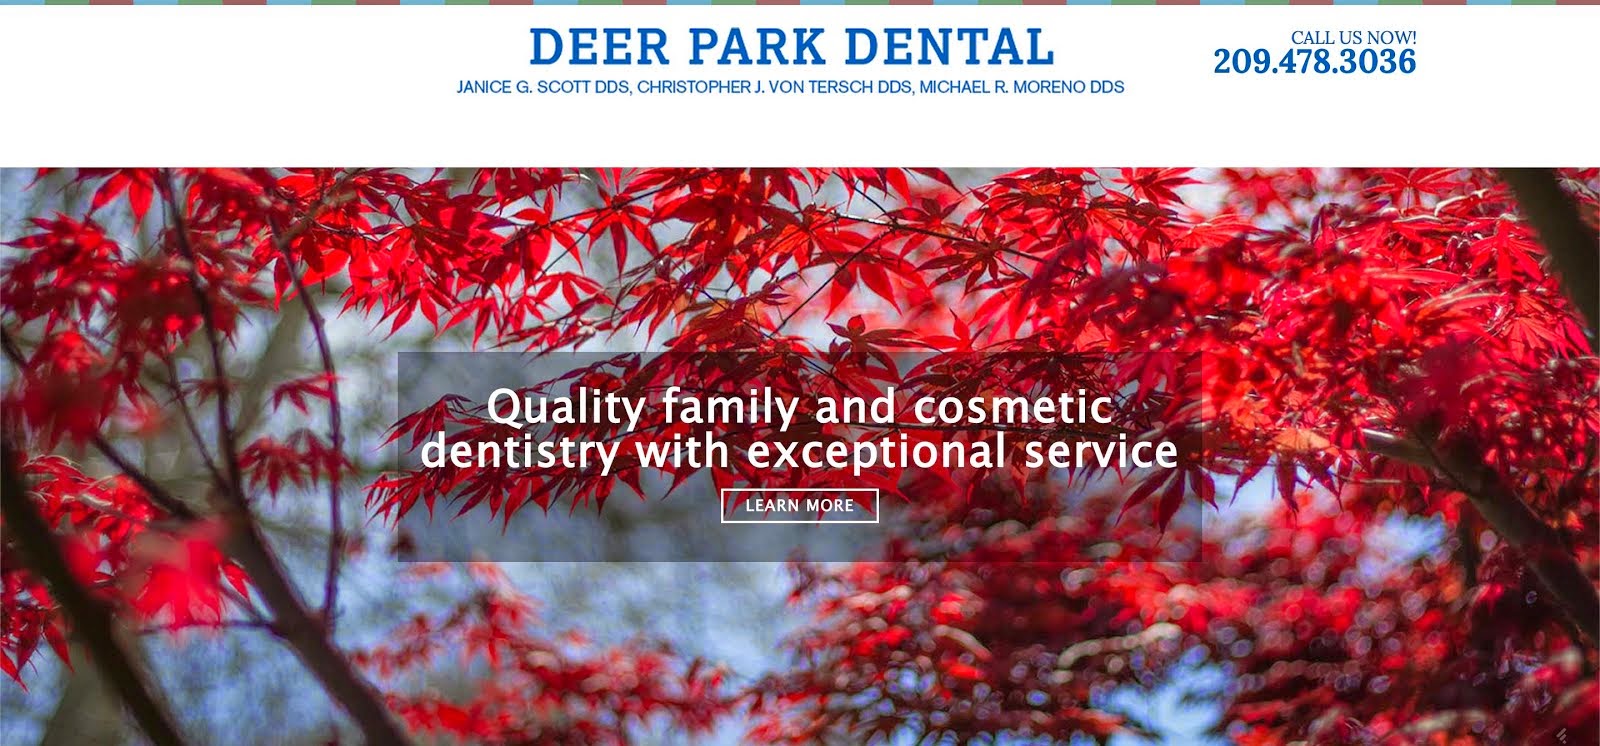 Deer Park Dental